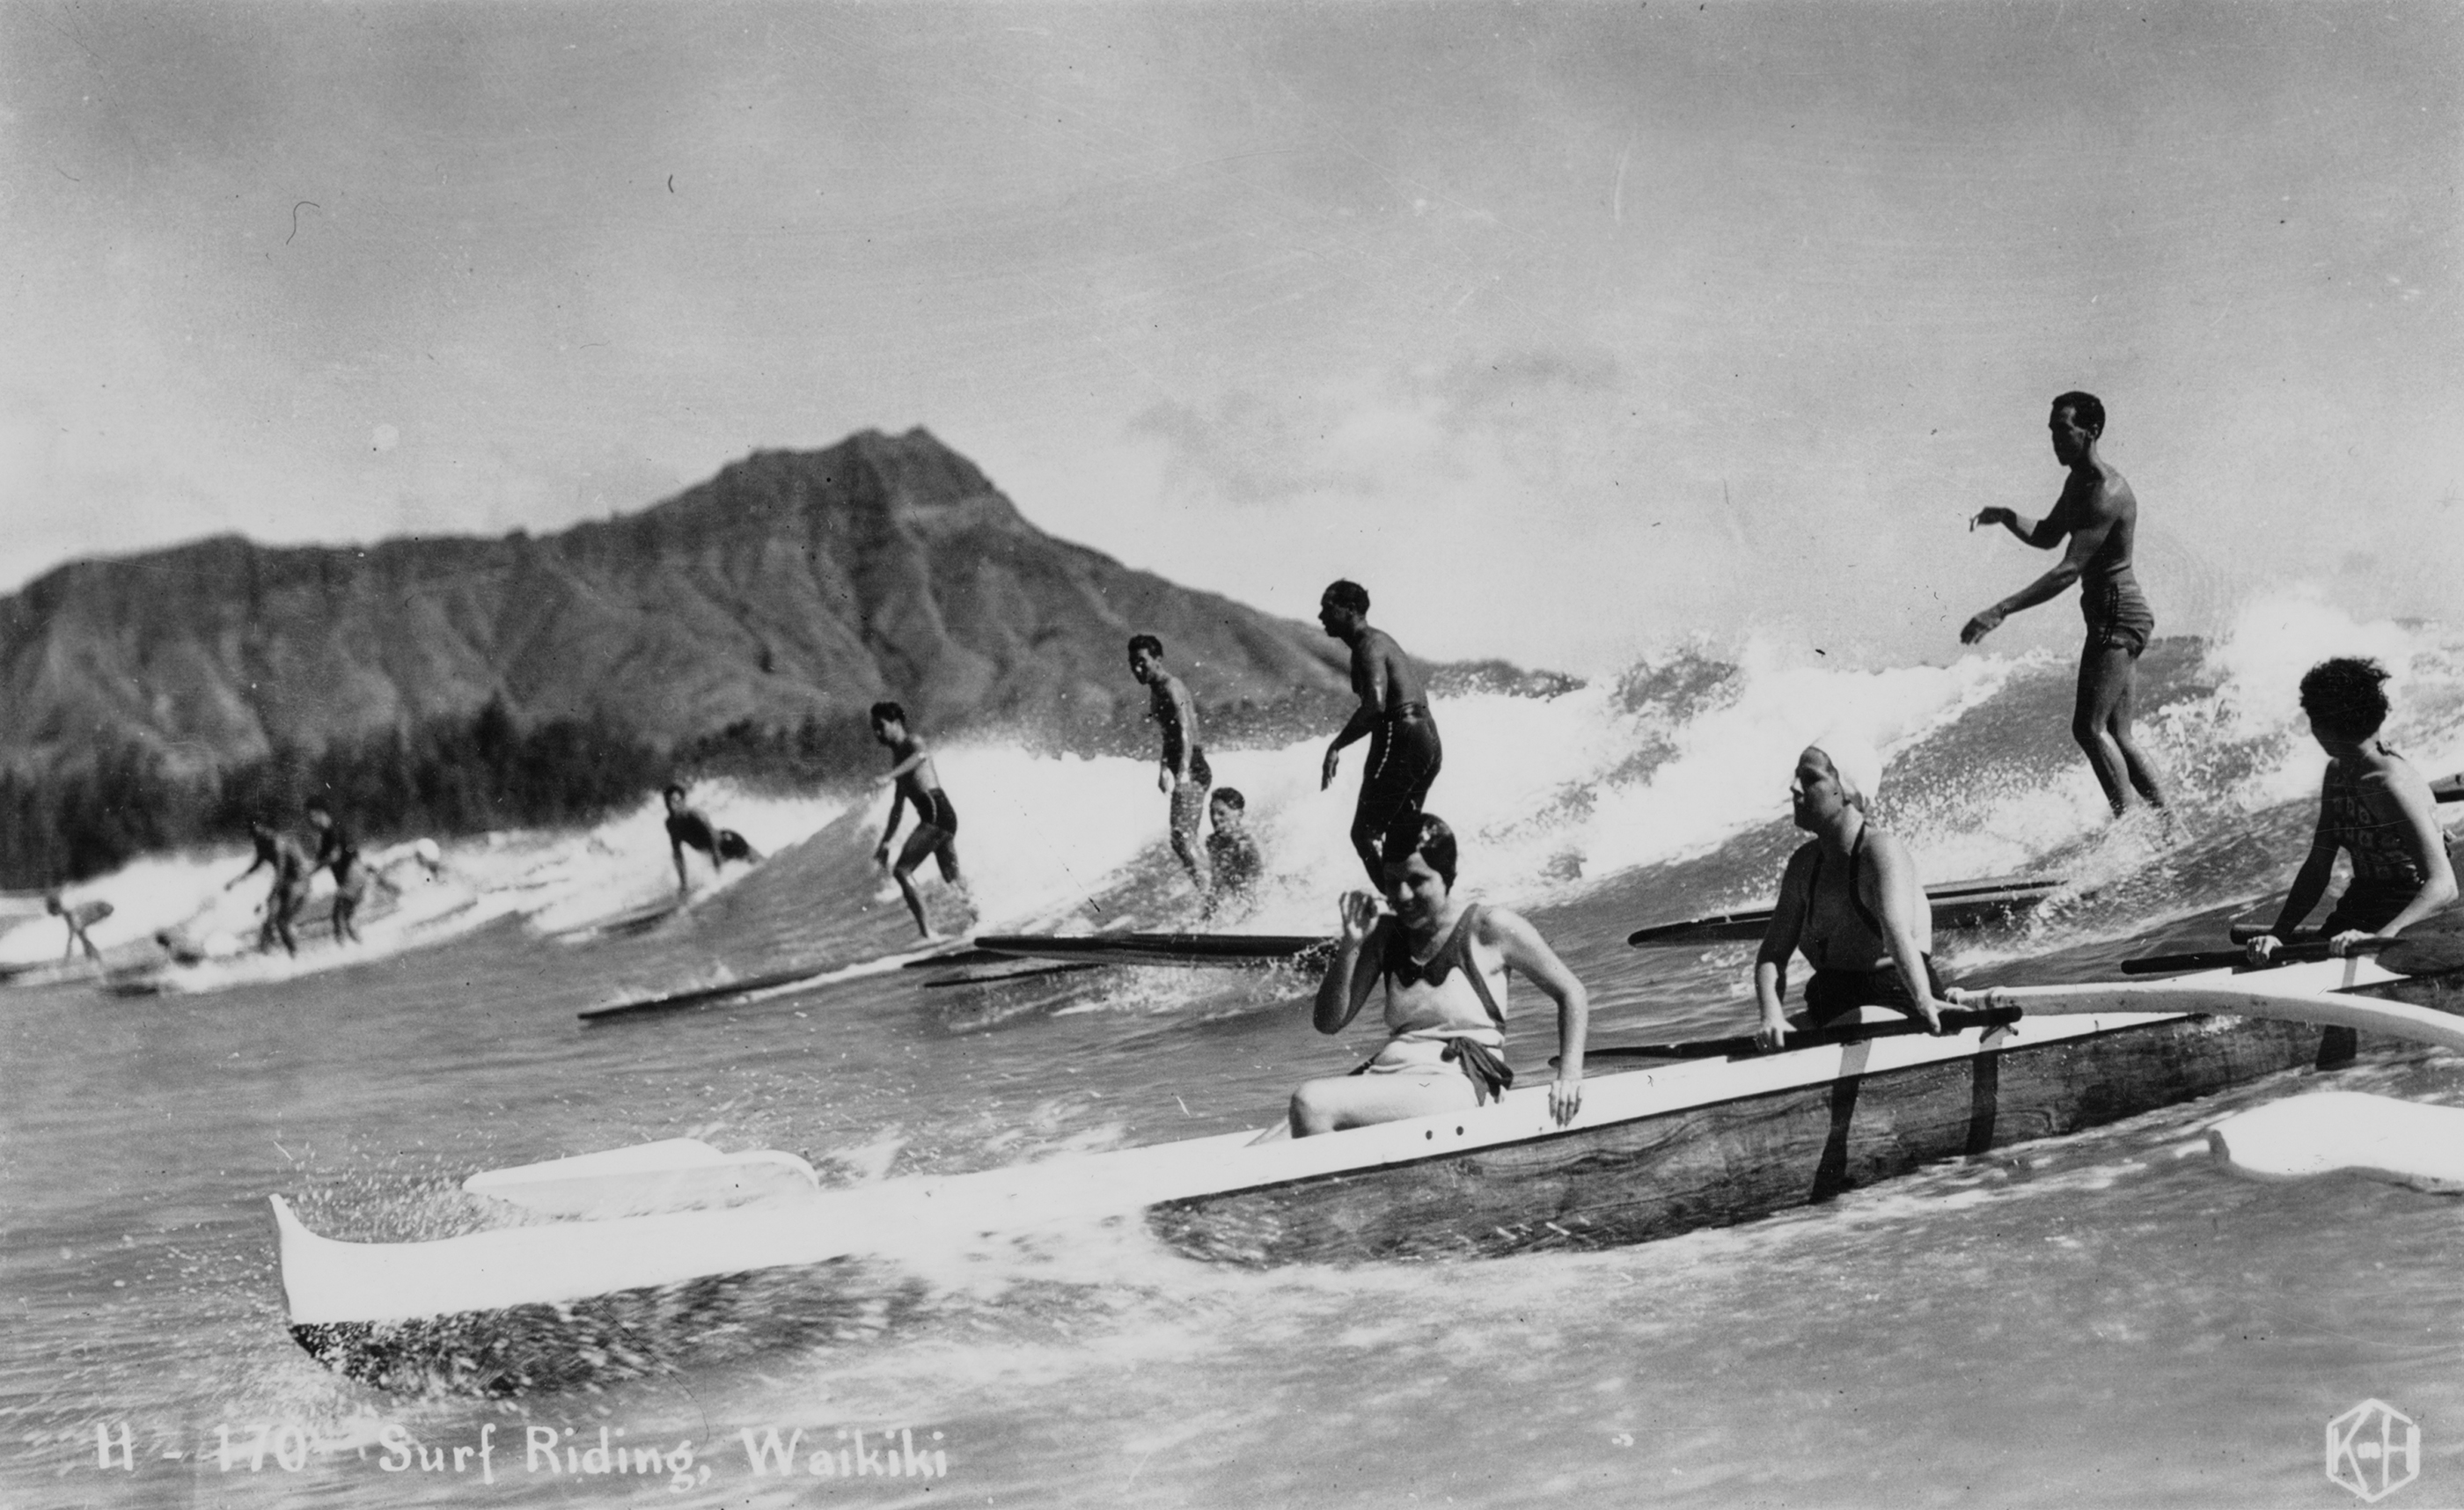 [Pākā waʻa] Postcard showing canoe surfing with Diamond Head in background; Oʻahu, Hawaiʻi, ca. 1935. Photo by Kodak Hawaiʻi, Bishop Museum Archives. Used with permission.